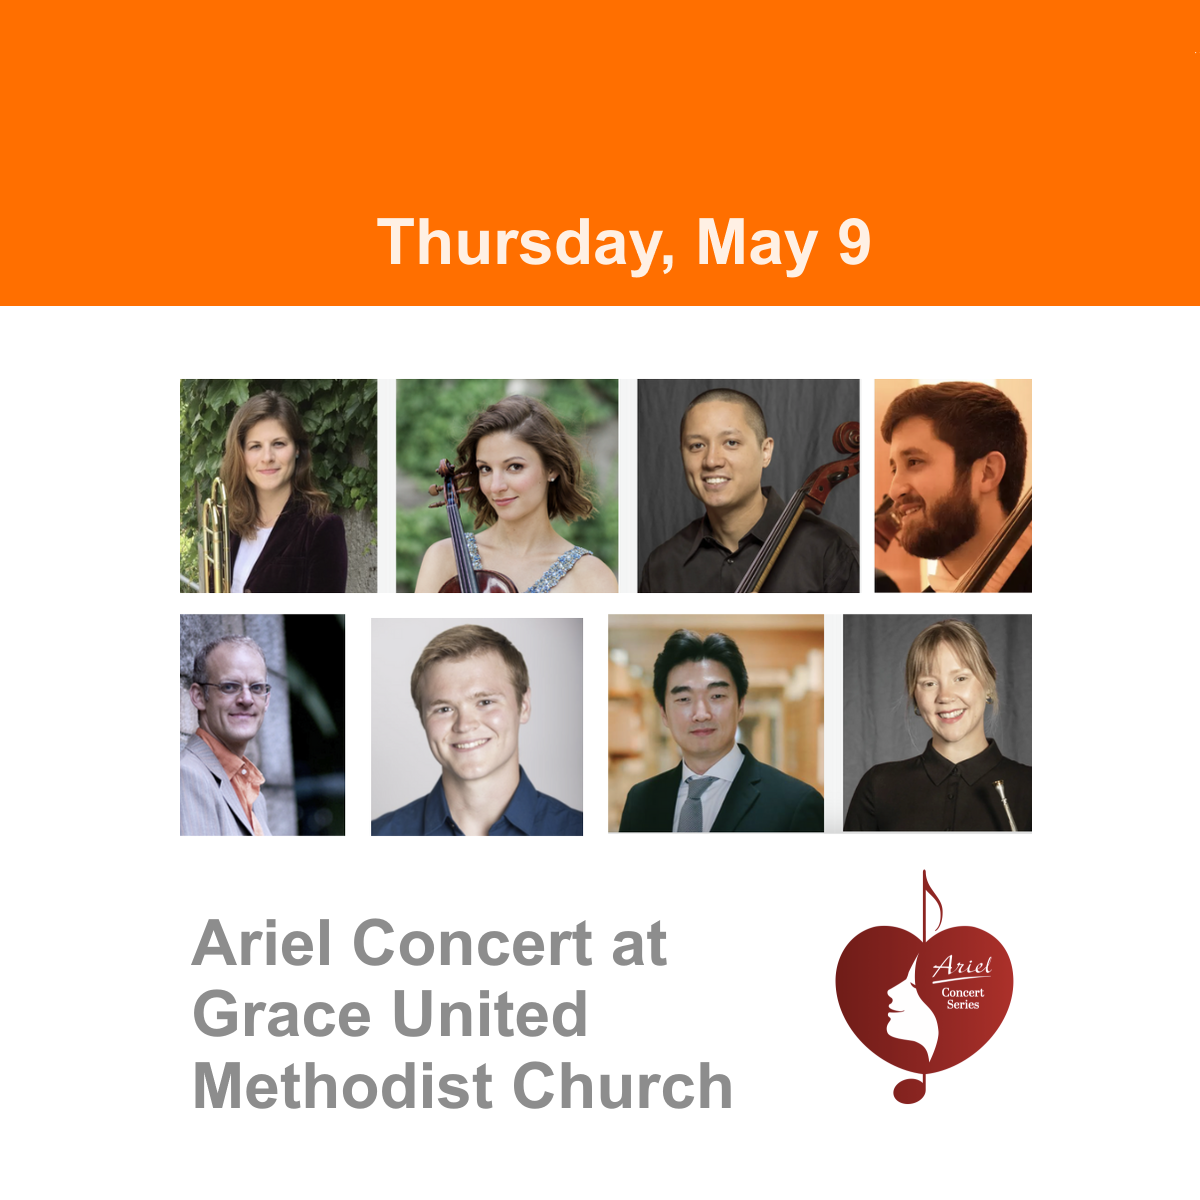 Ariel Concert Series: Ariel Concert at Grace United Methodist Church